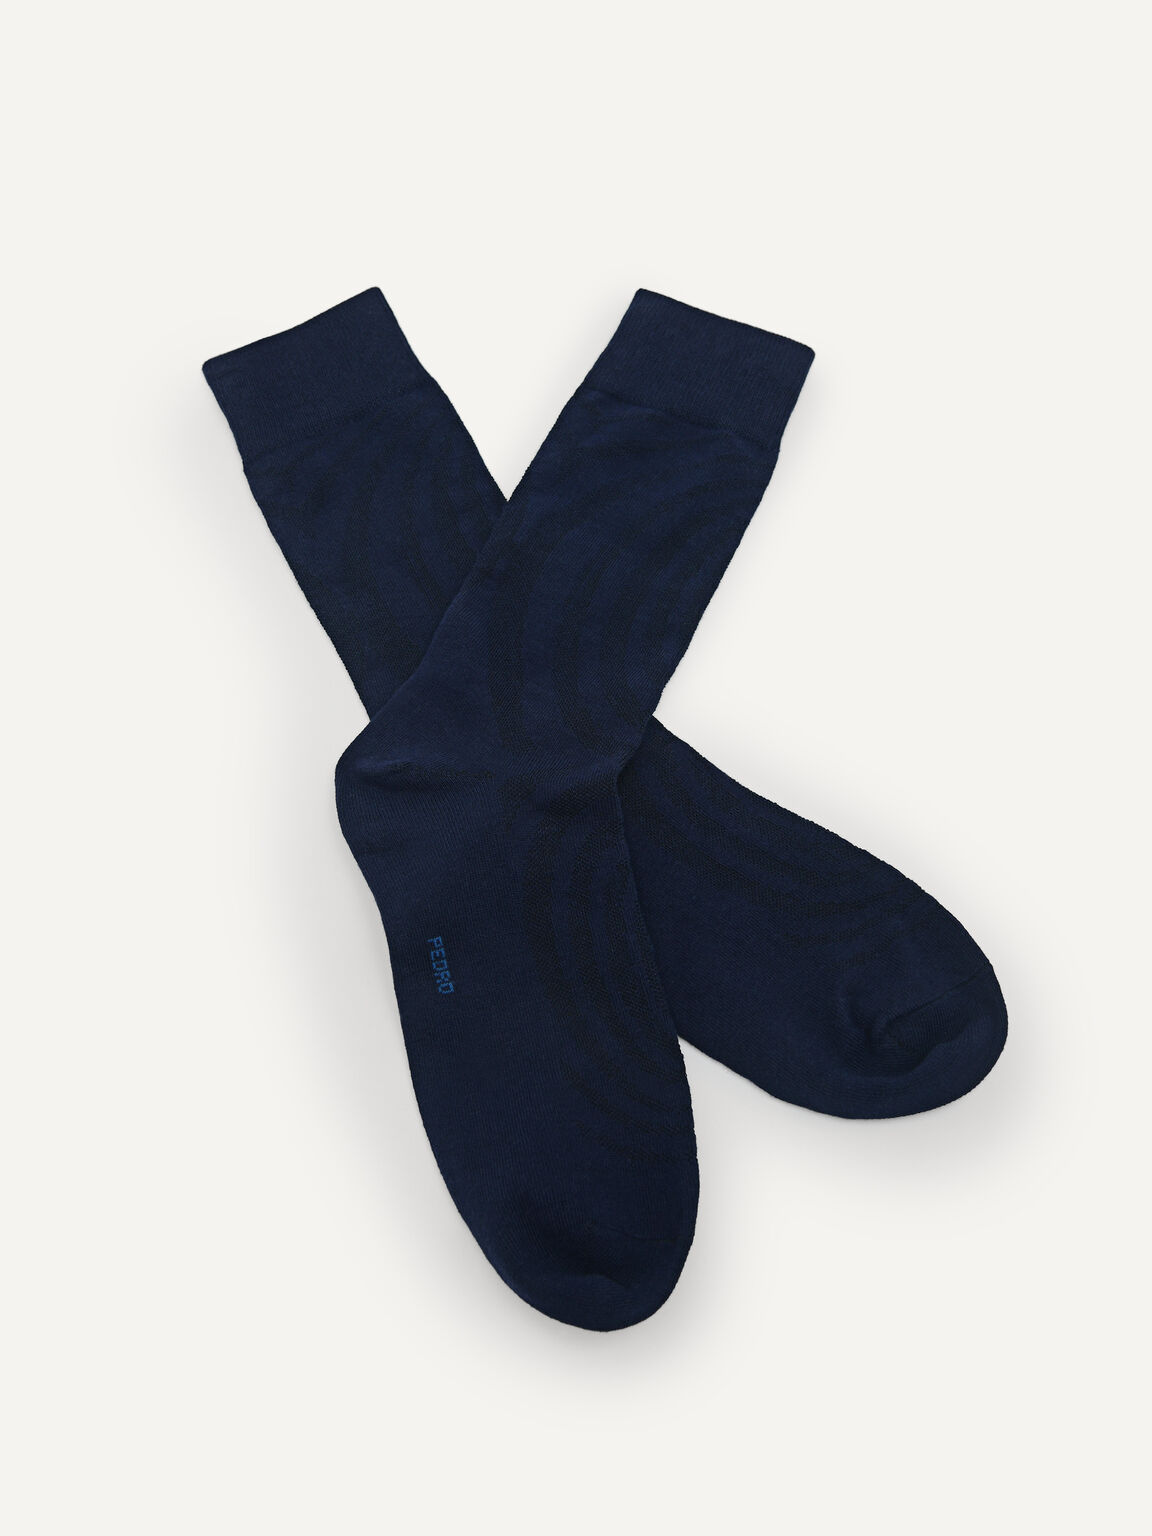 Men's Cotton Socks, Navy, hi-res